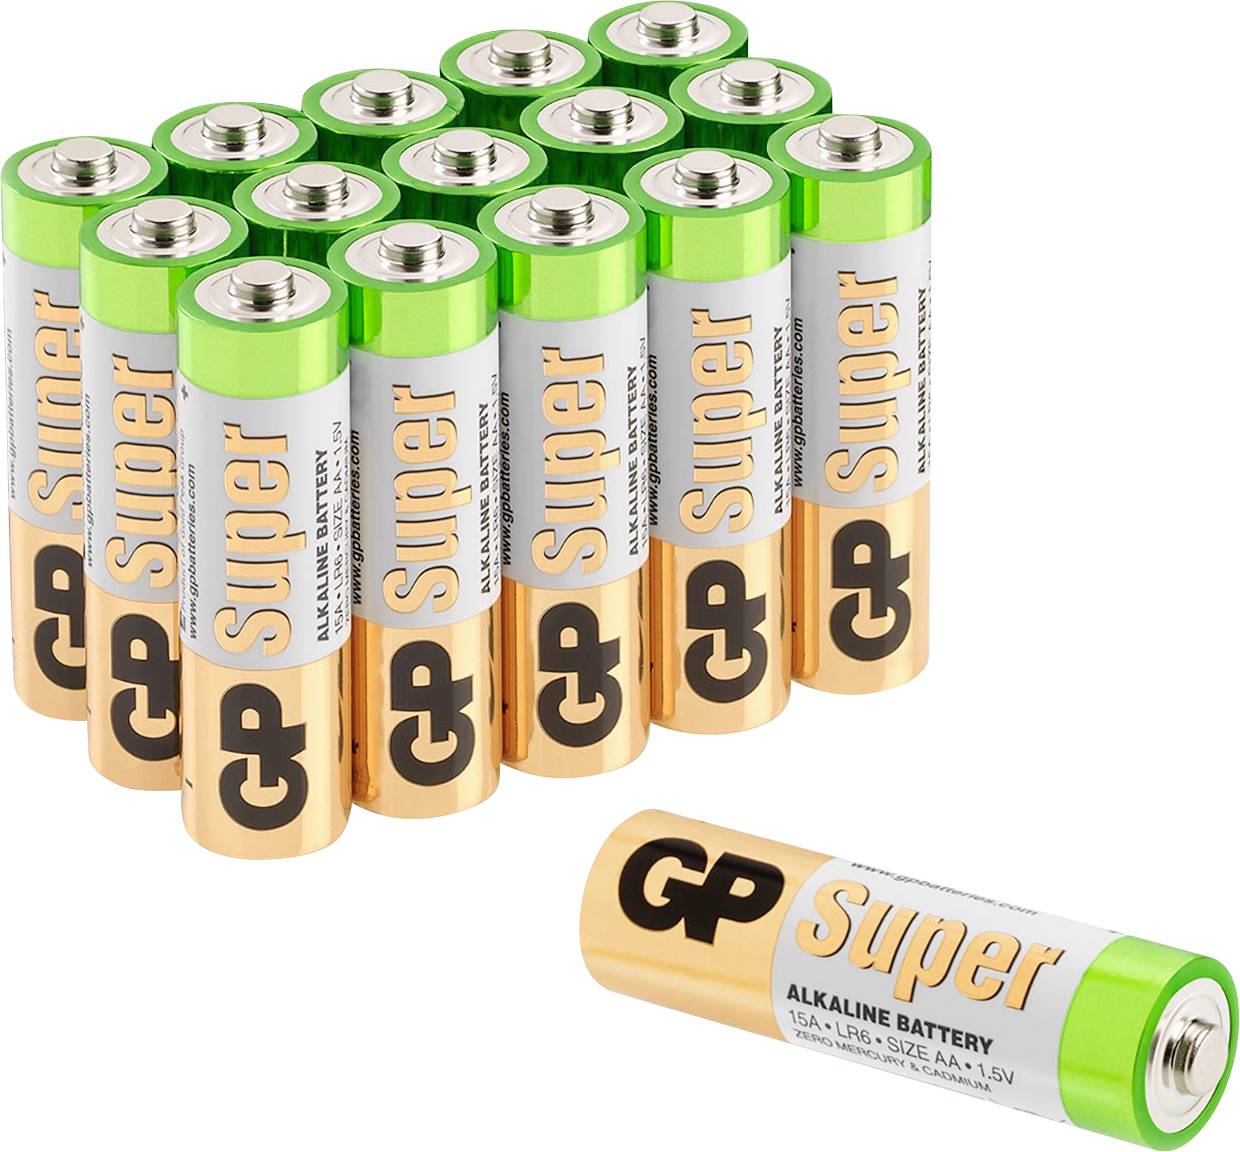 Gp batteries super. Батарейка lr03(AAA) super. GP super Alkaline Battery 4+4 8 шт. Аккумуляторные батарейки GP super Alkaline. GP super Alkaline Battery Bulk.